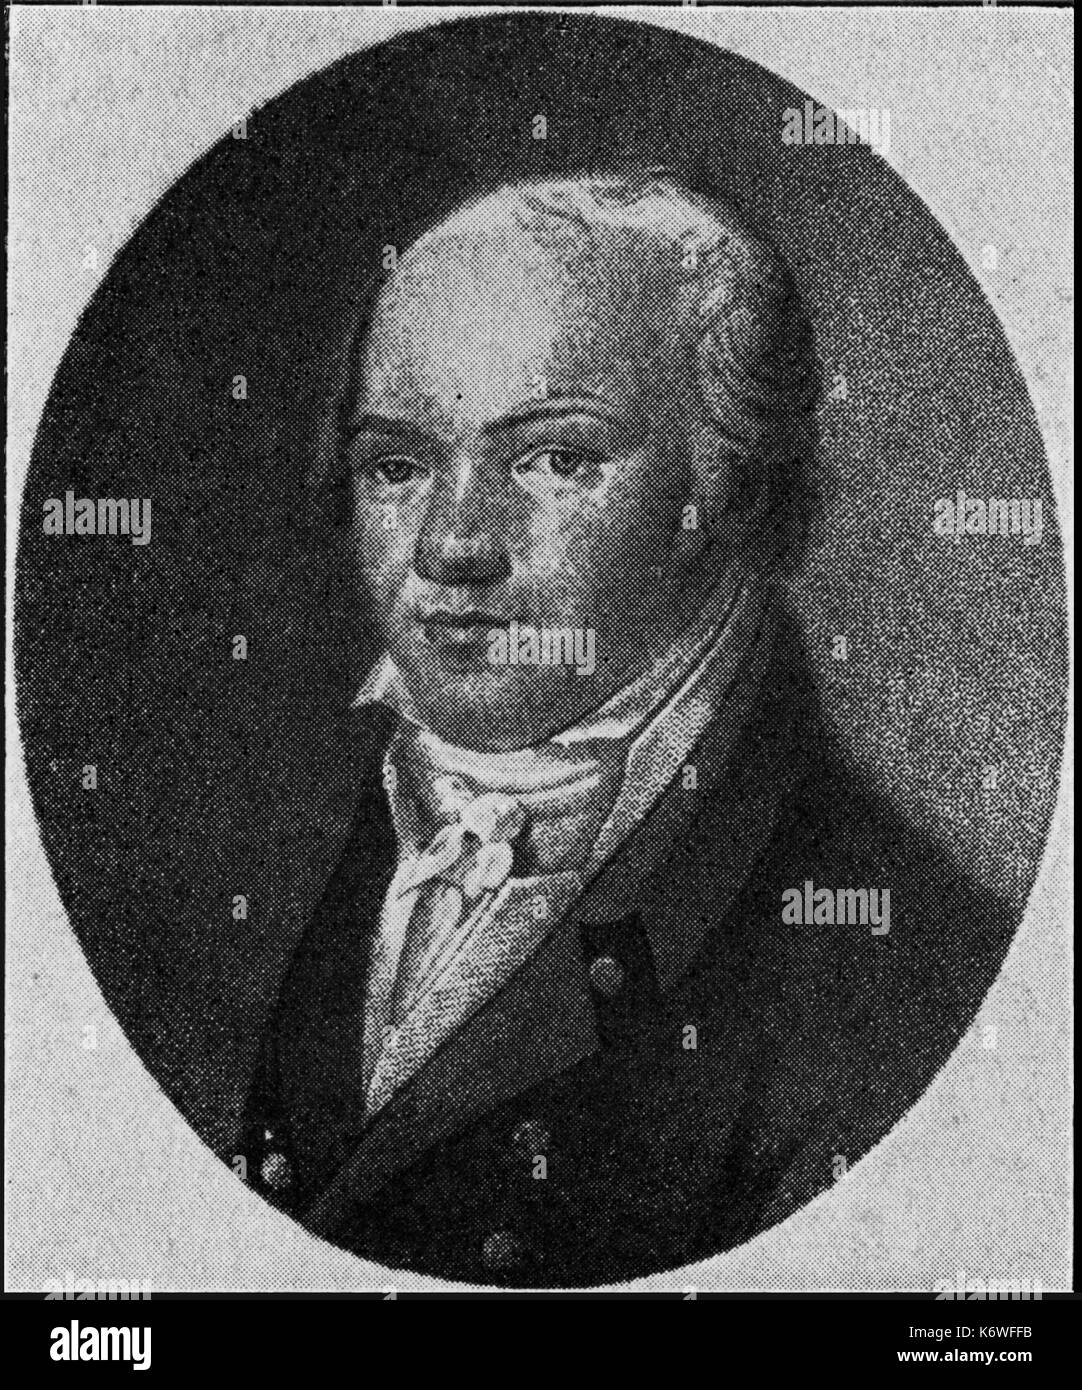 ROMBERG, Andreas - 1810 engraving. - composer of Schiller 's Lied von der Glocke. German violinist and composer, 1767-1821 Stock Photo